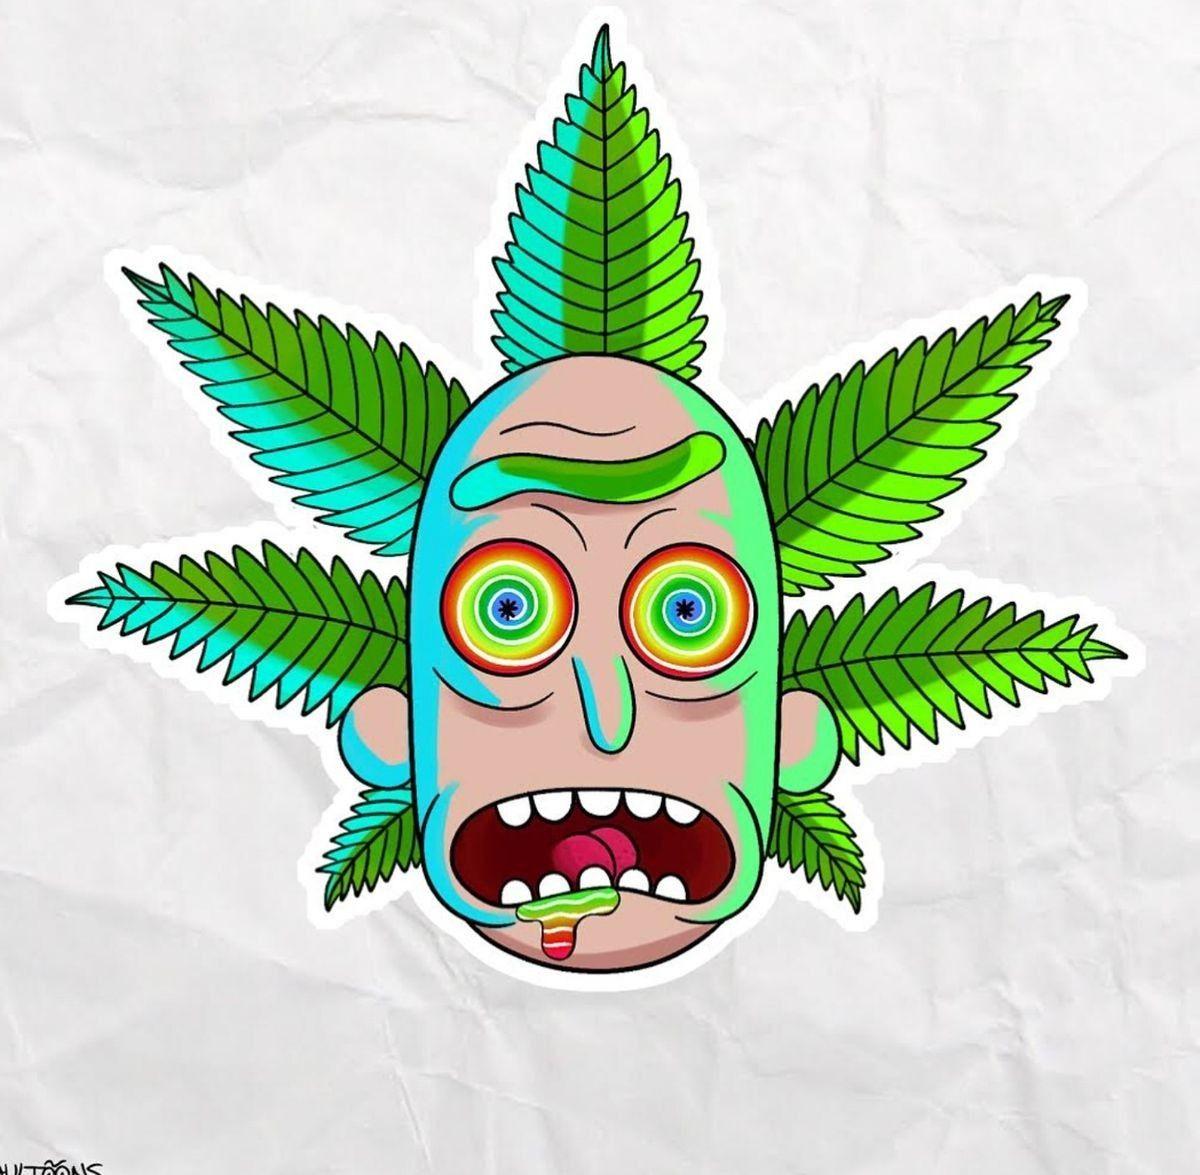 Rick and Morty Weed Wallpapers - Top Những Hình Ảnh Đẹp